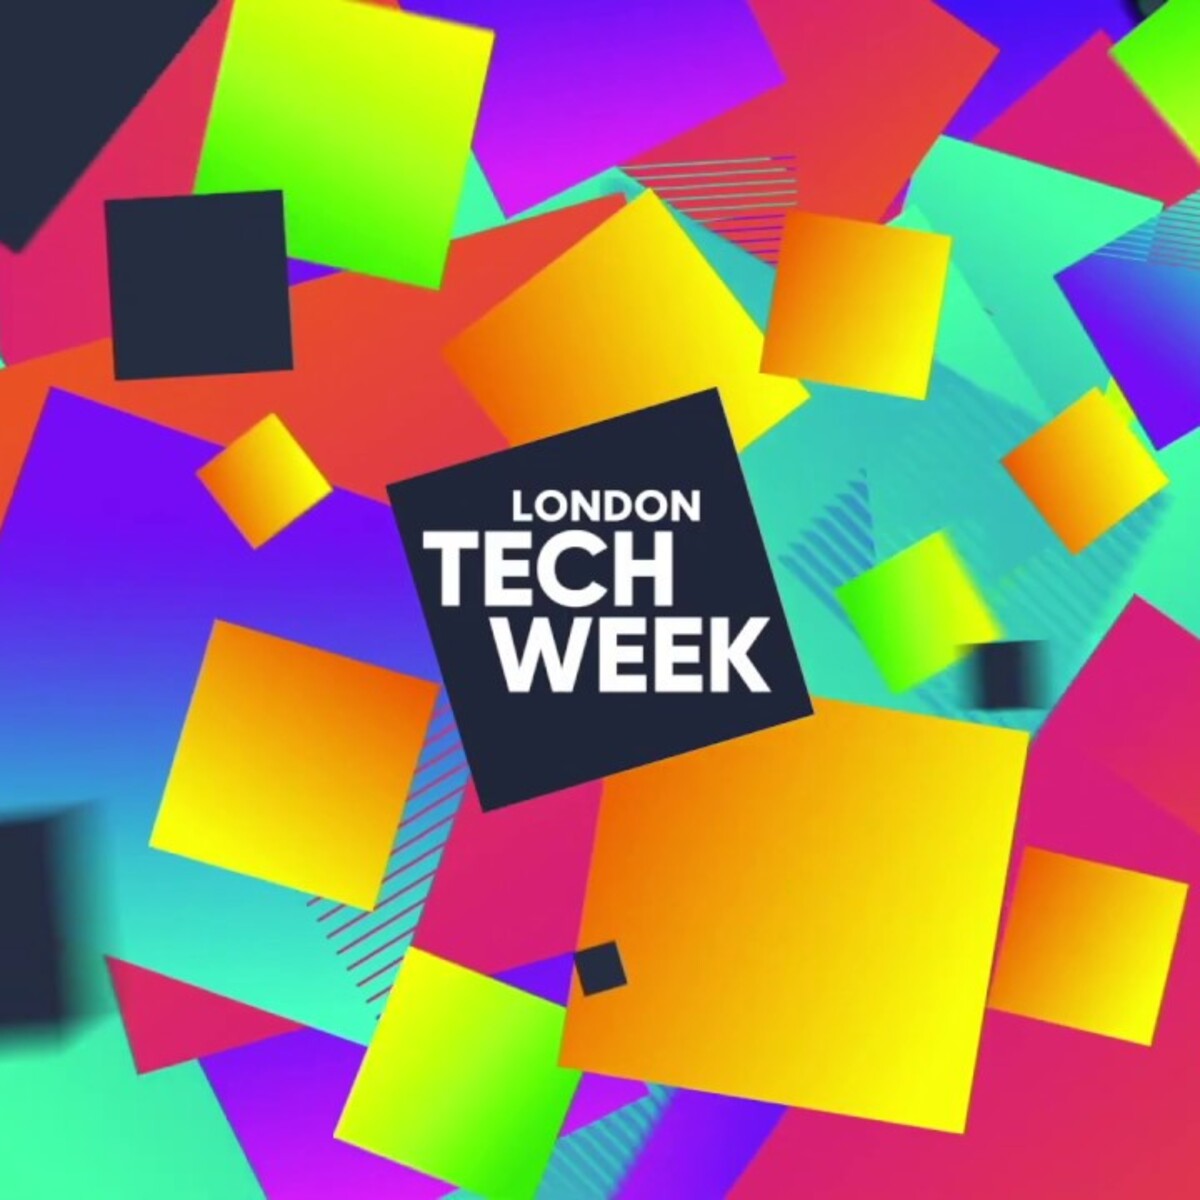 London Tech Week 2020